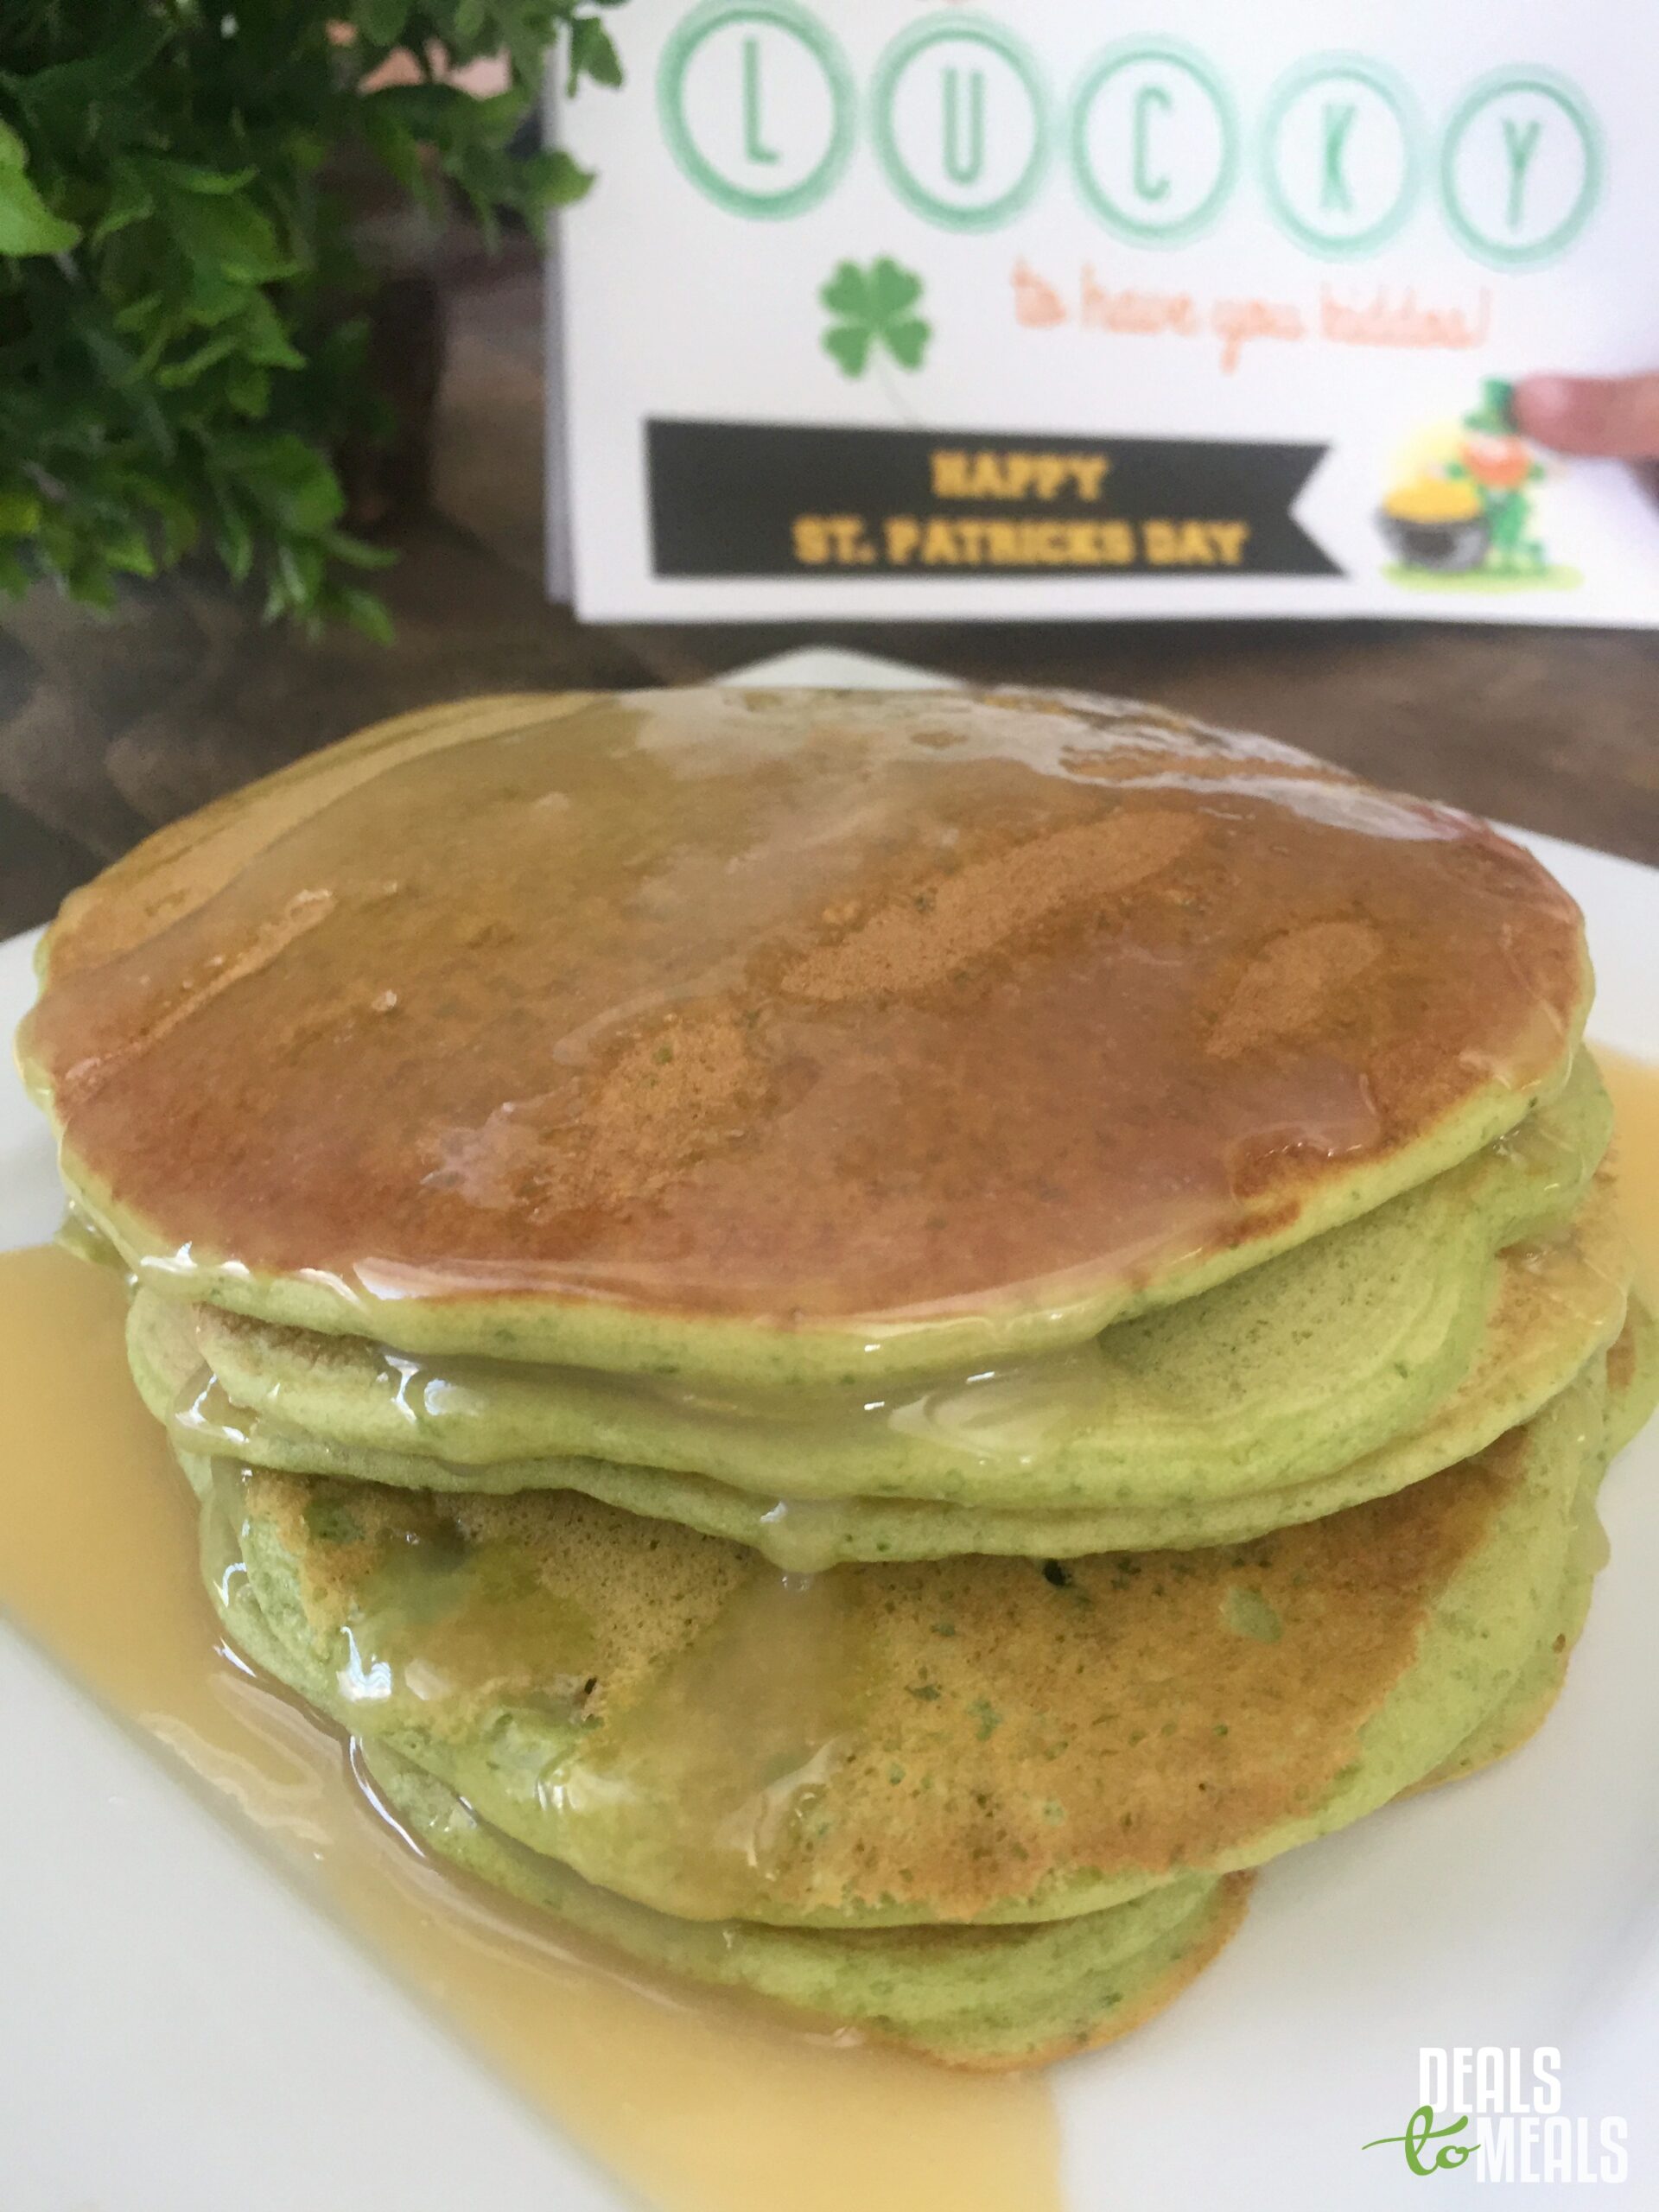 healthy green pancakes